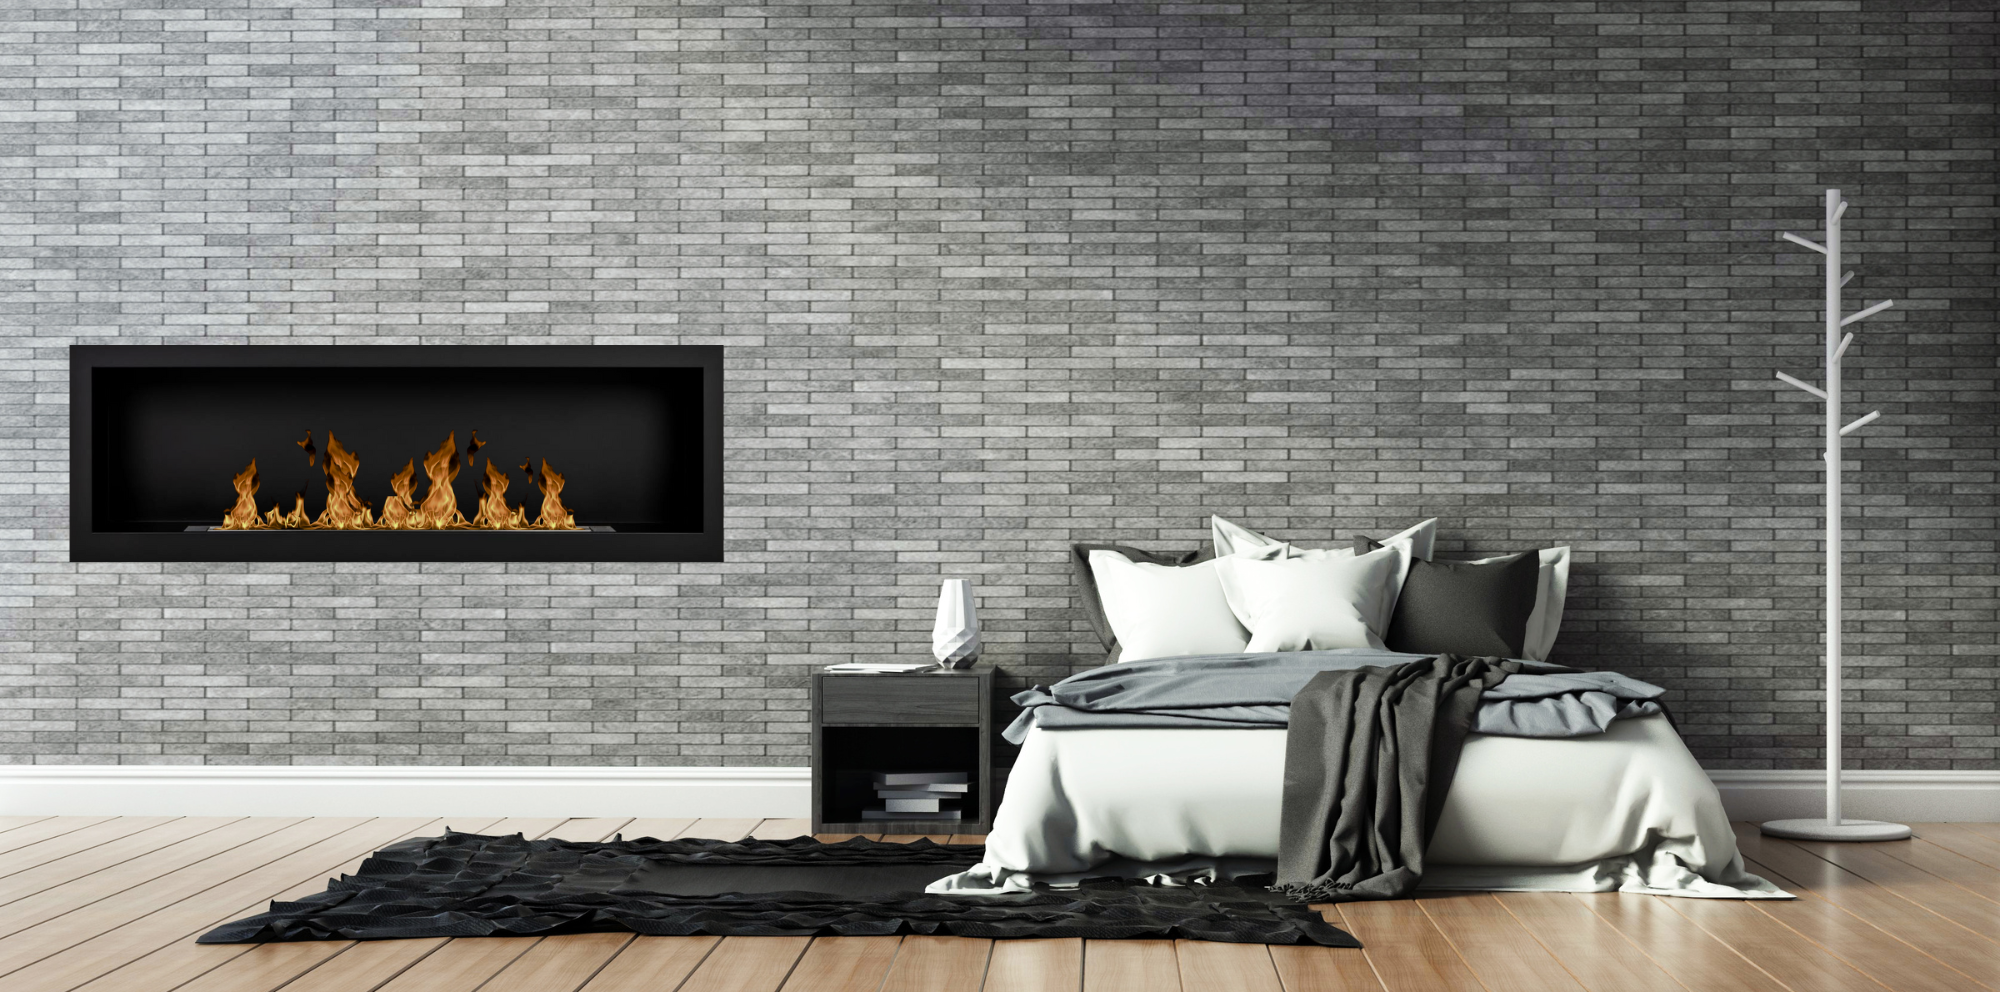 S - Line Black Full BOX Bio-Ethanol Wall Fireplace 120 x 40 CM